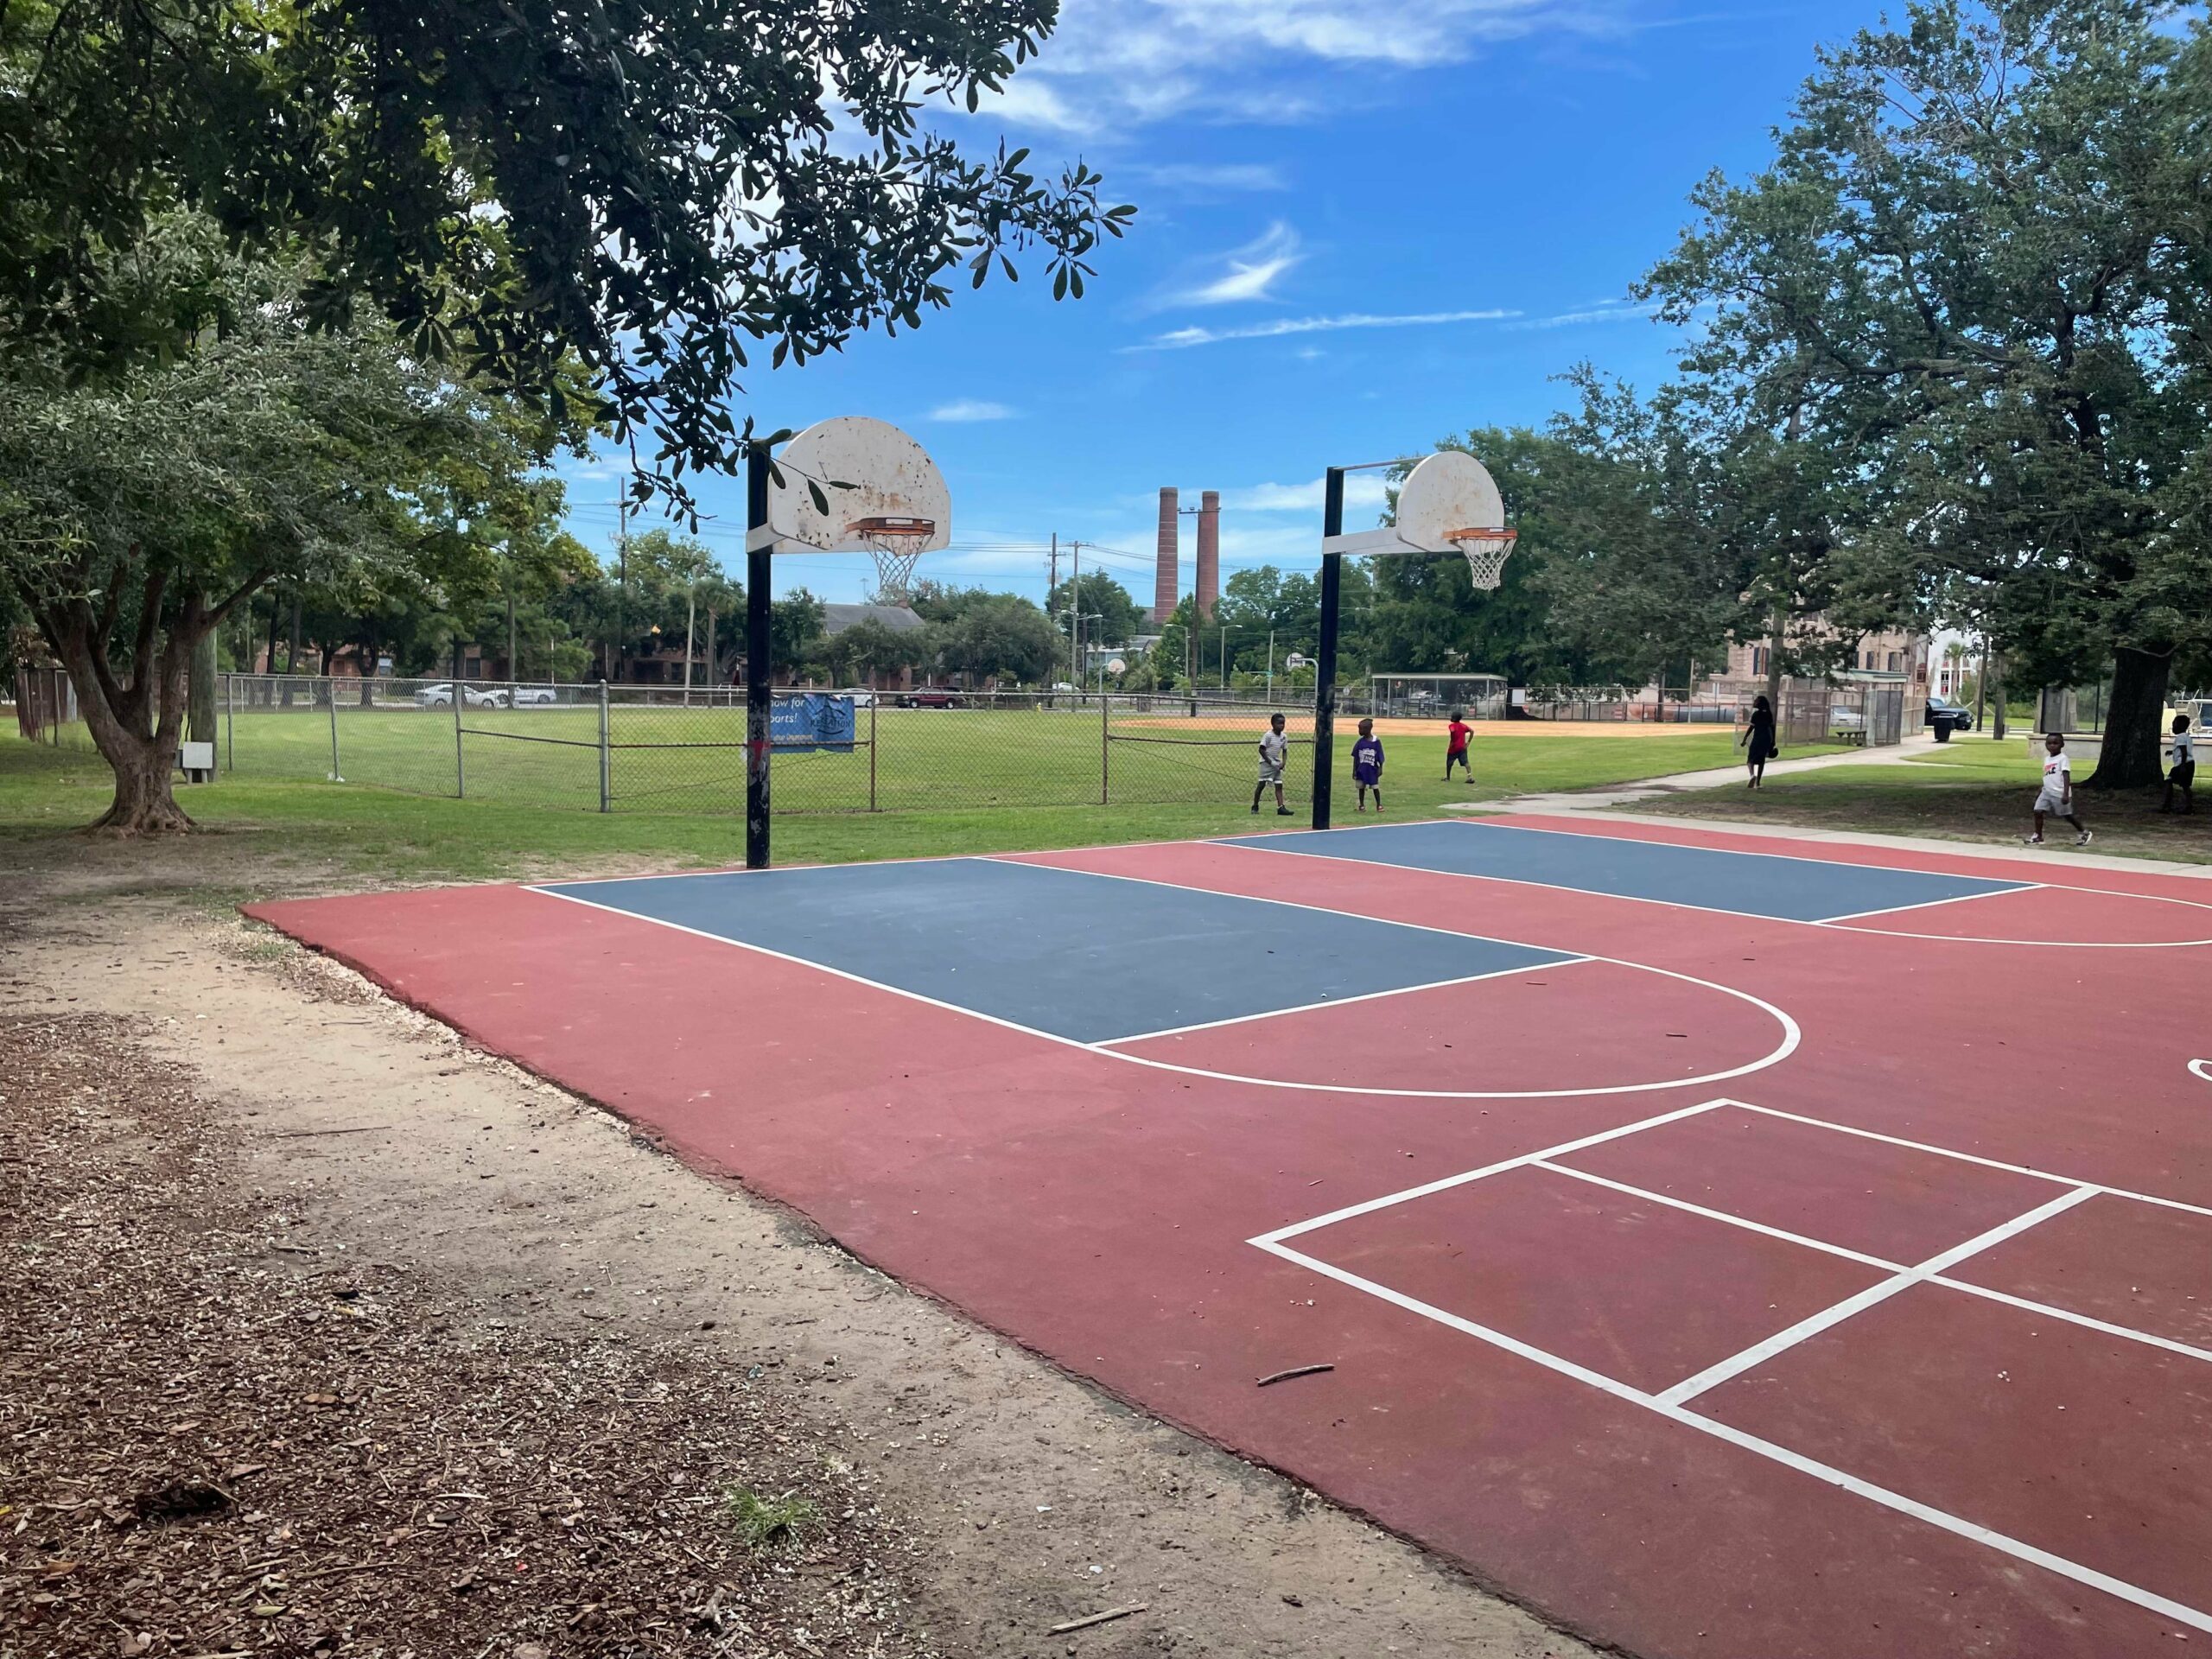 Basketball courts at Martin Park